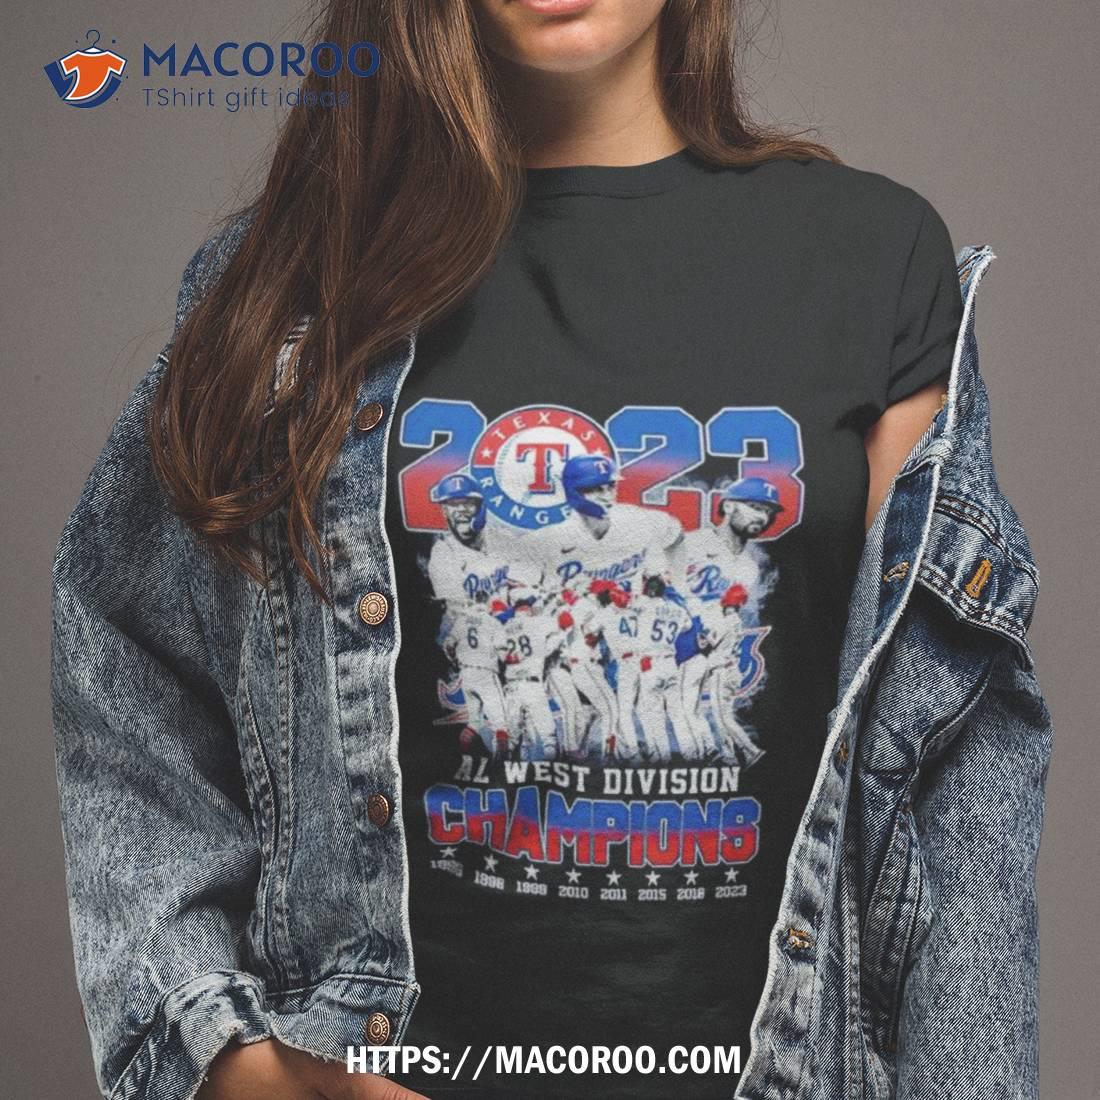 Vintage Texas Rangers 2010 AL Champions Shirt Size Large